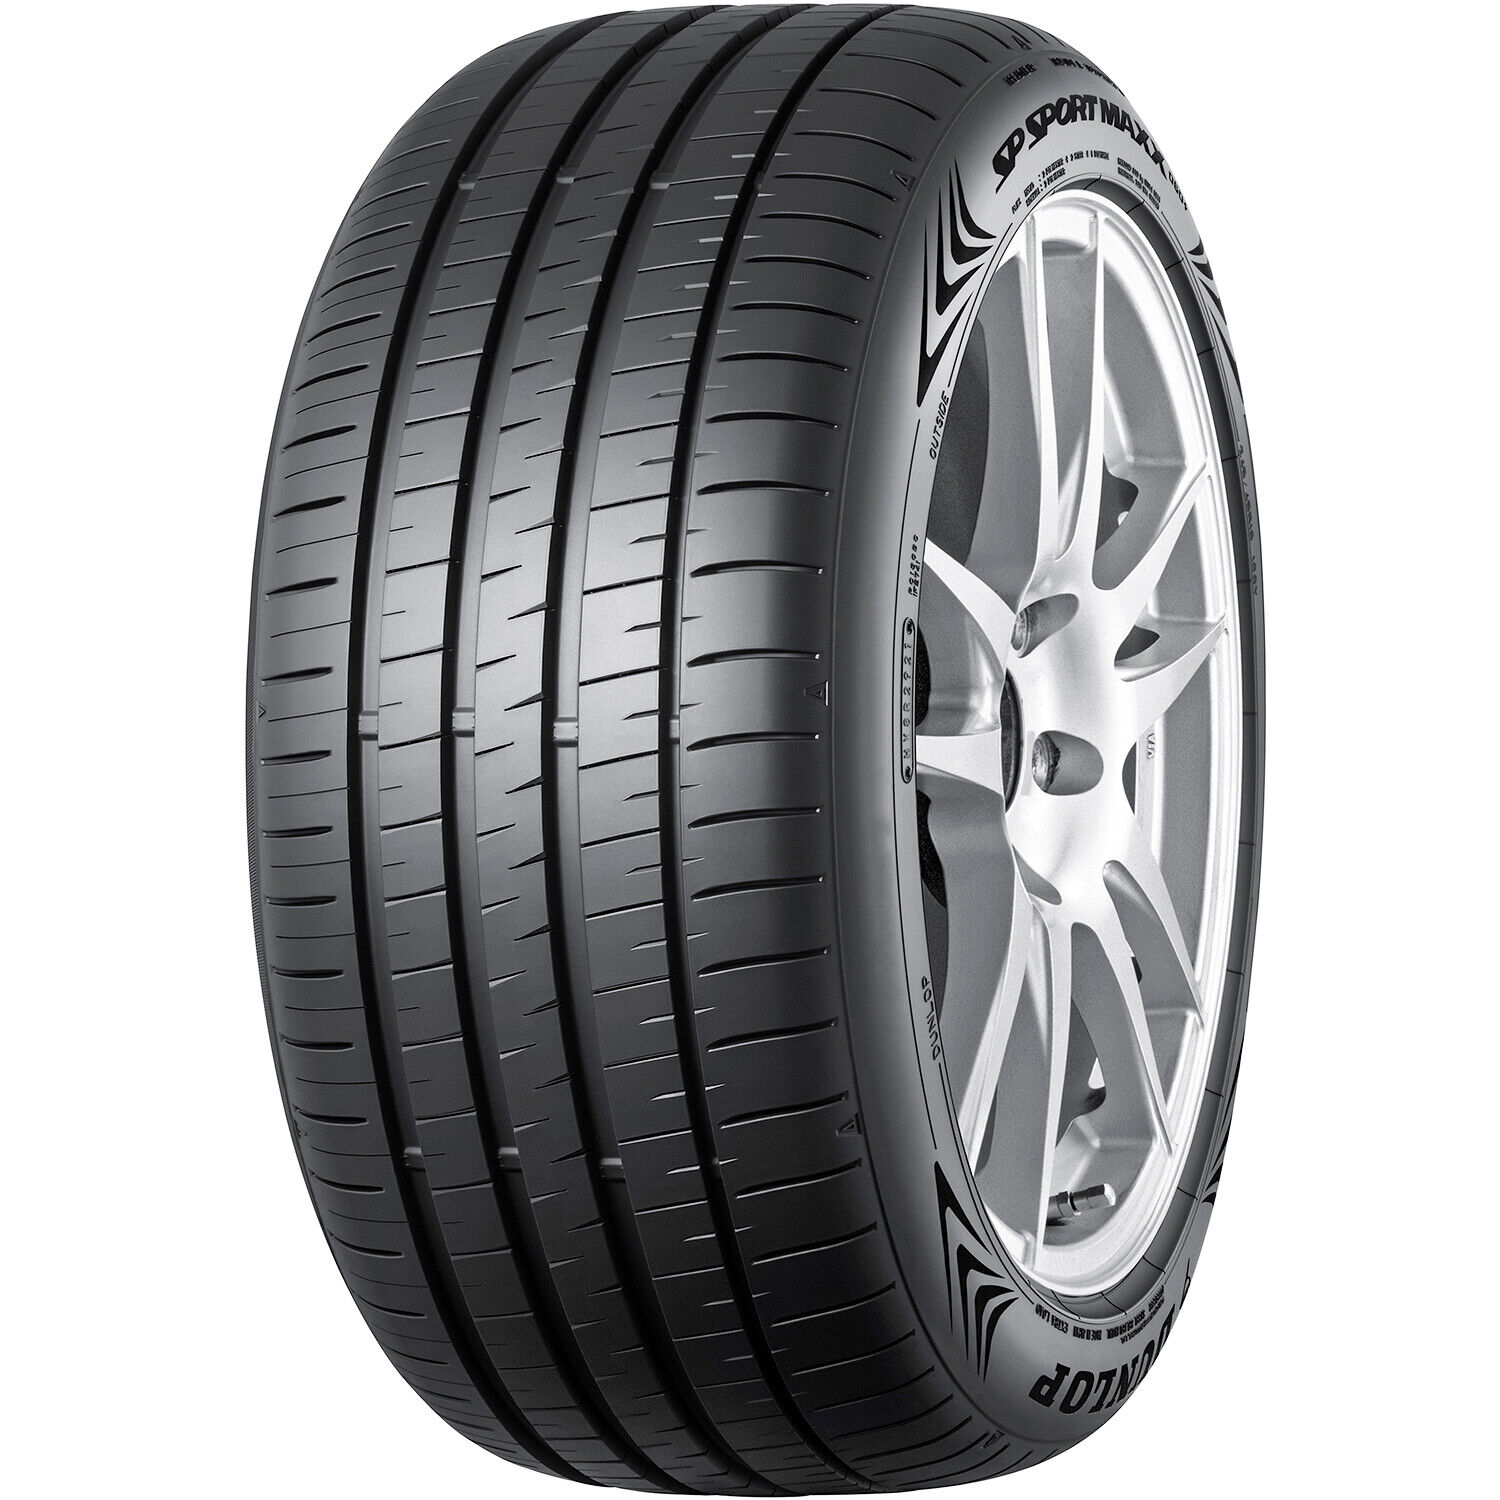 4 Tires Dunlop SP Sport Maxx 060+ 245/40R18 97Y XL High Performance